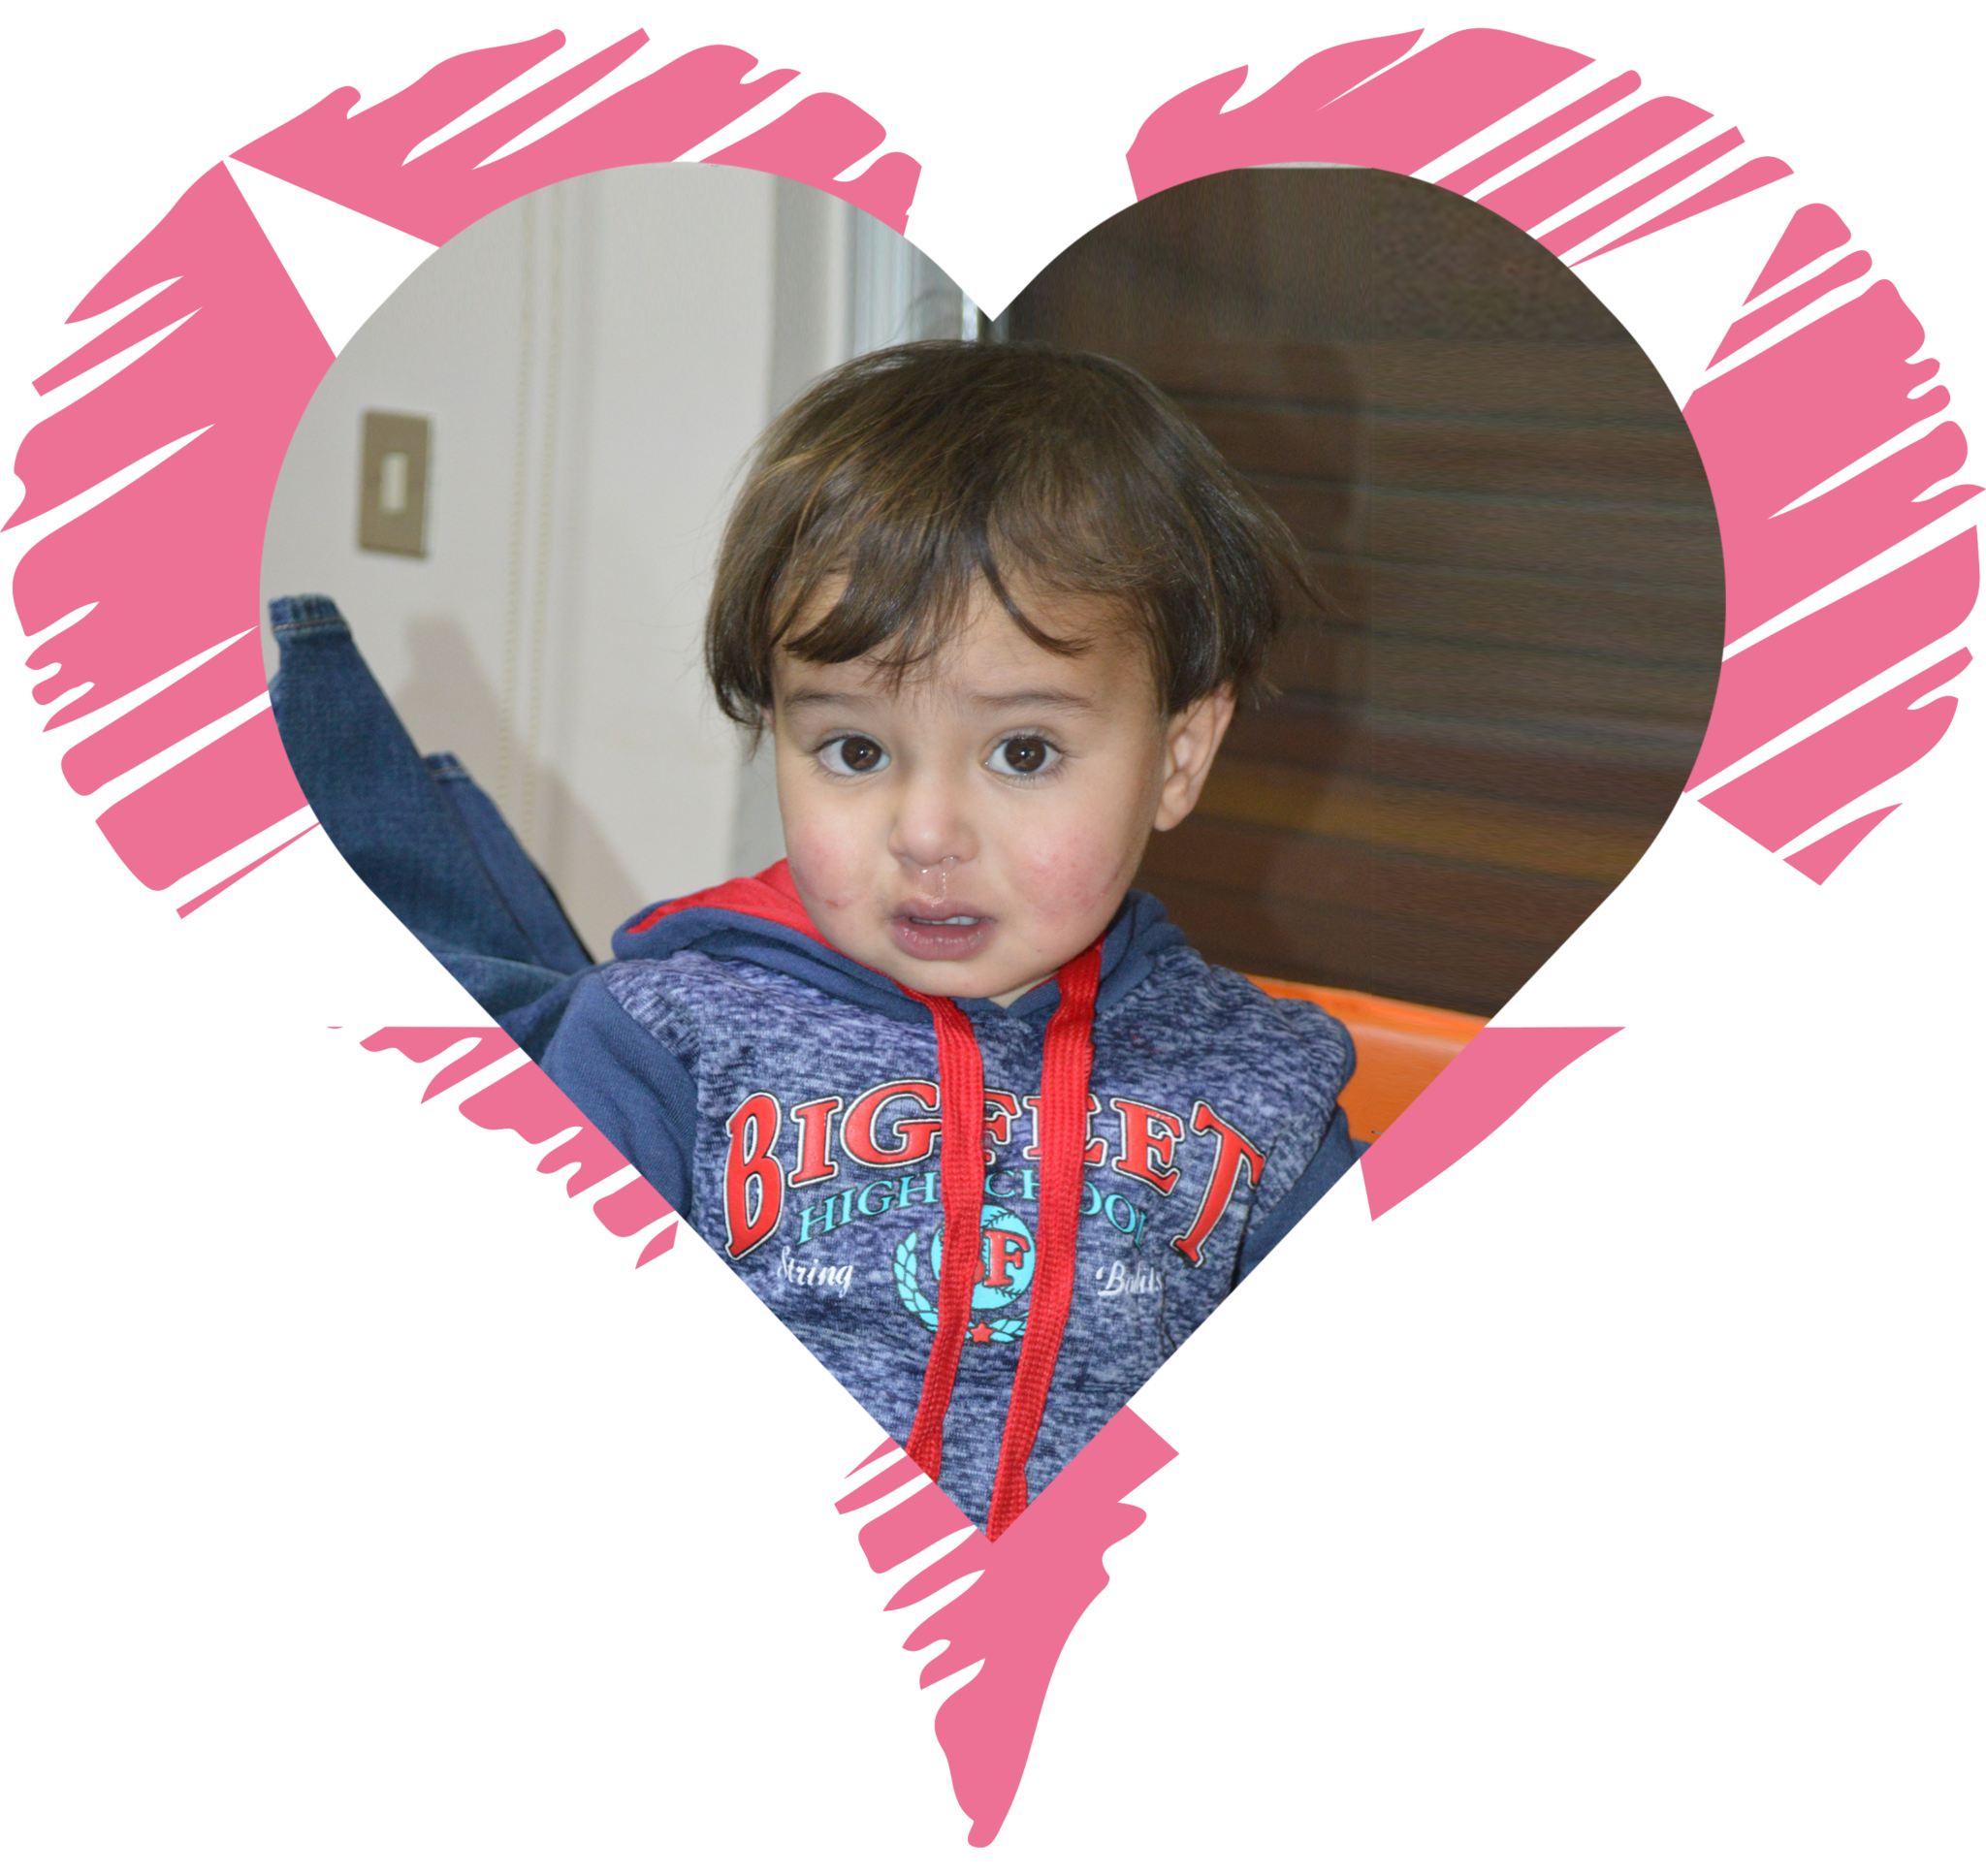 Meet Ahmed | Nonprofit Health Organization For Heart Disease in Children | Morning Star Foundation